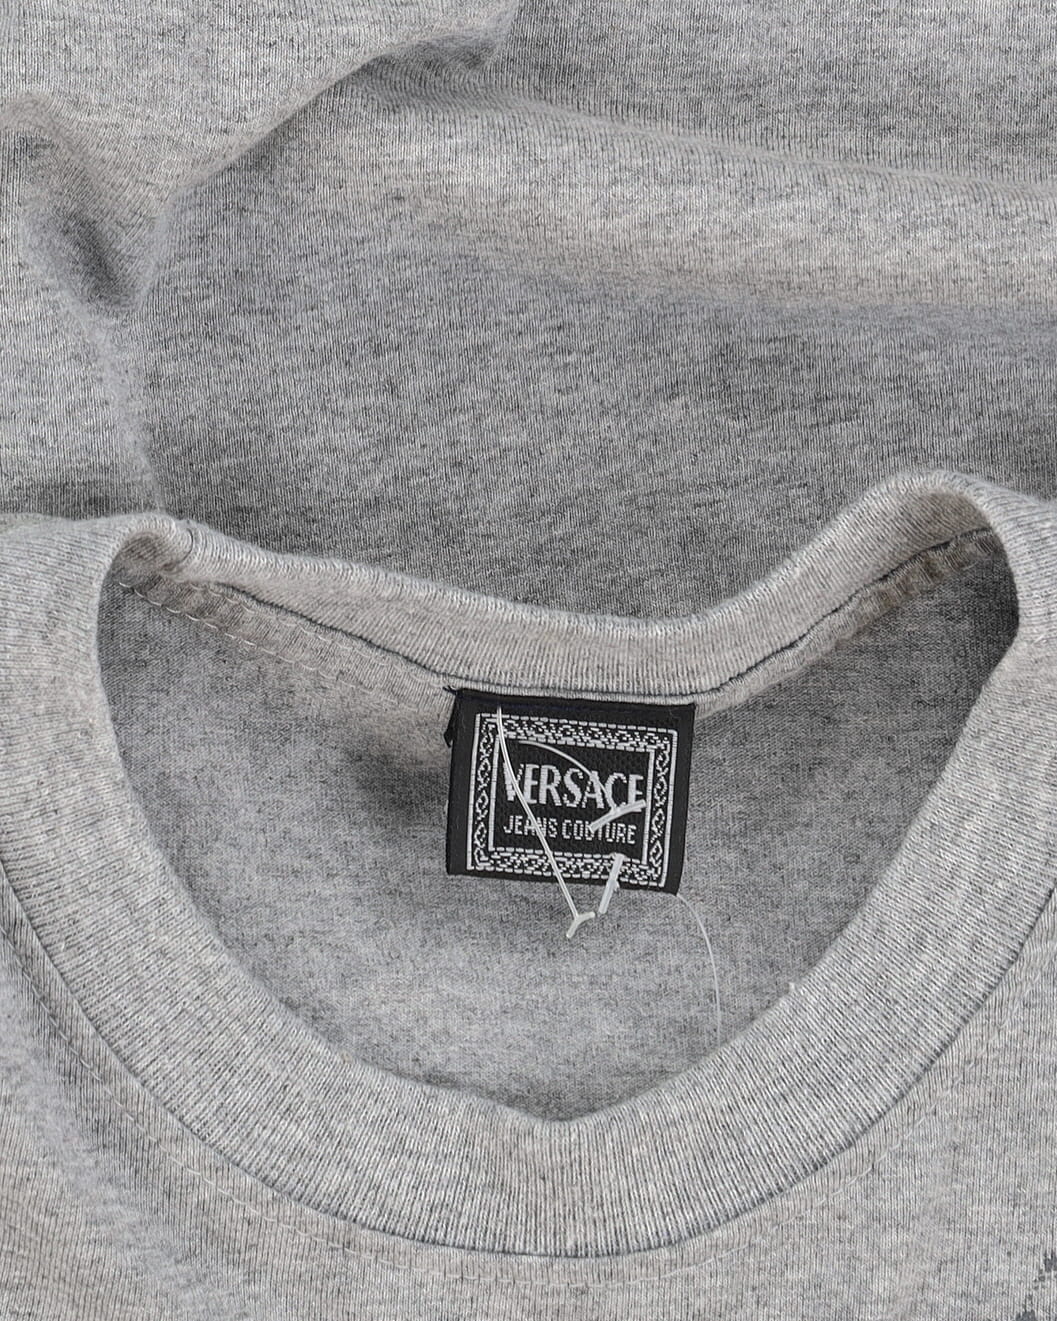 Versace Jeans Grey Long Sleeve T-Shirt - S / M